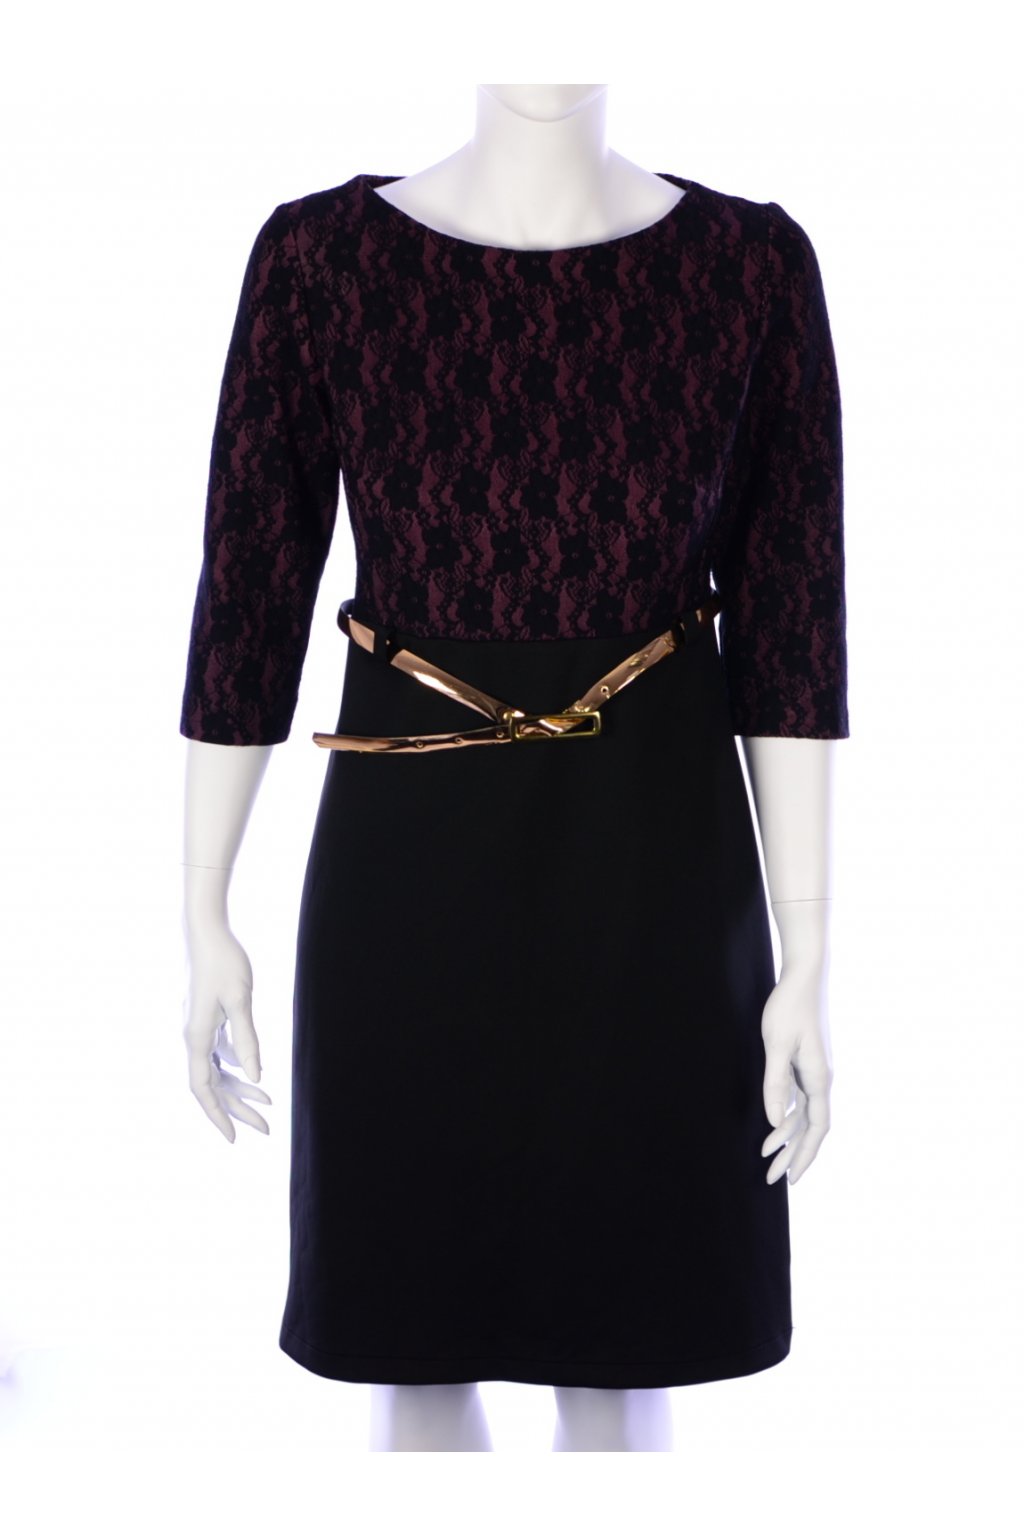 Šaty fialovo-černé s krajkou Adika vel. 40